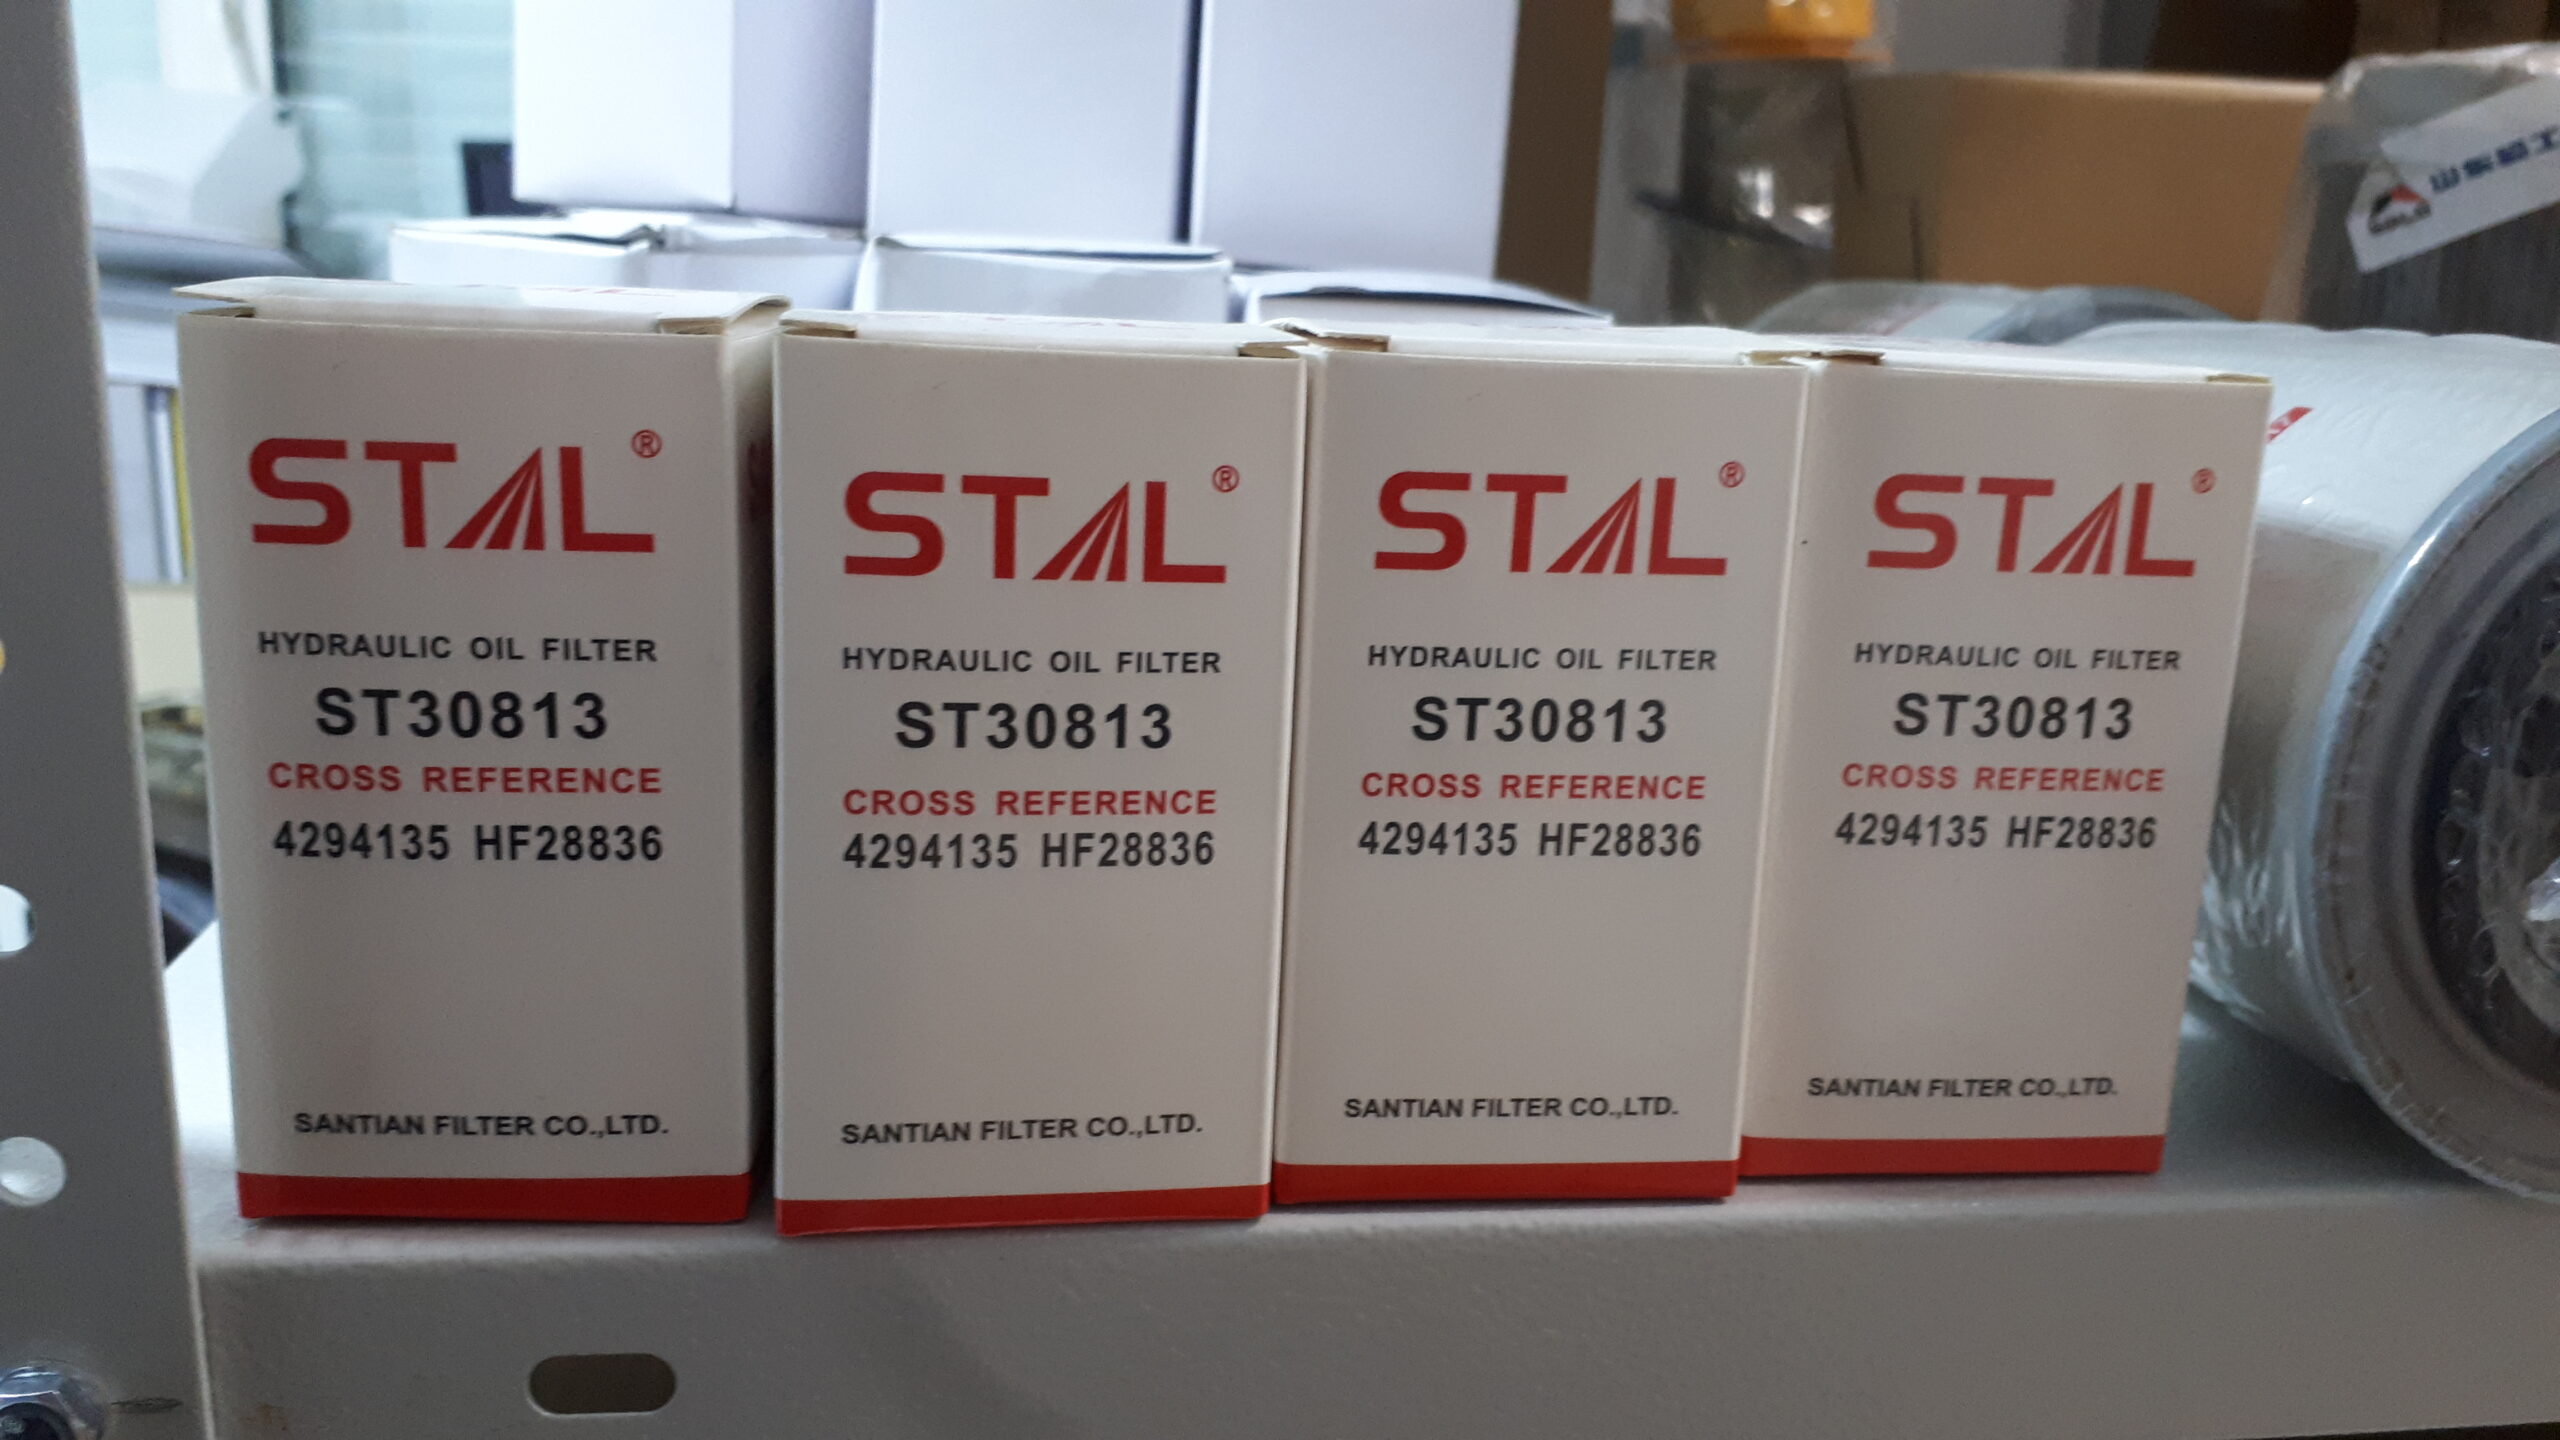 Stal product. Stal st20169. Stal фильтры st41340ab. Stal st30890. Stal st20047.